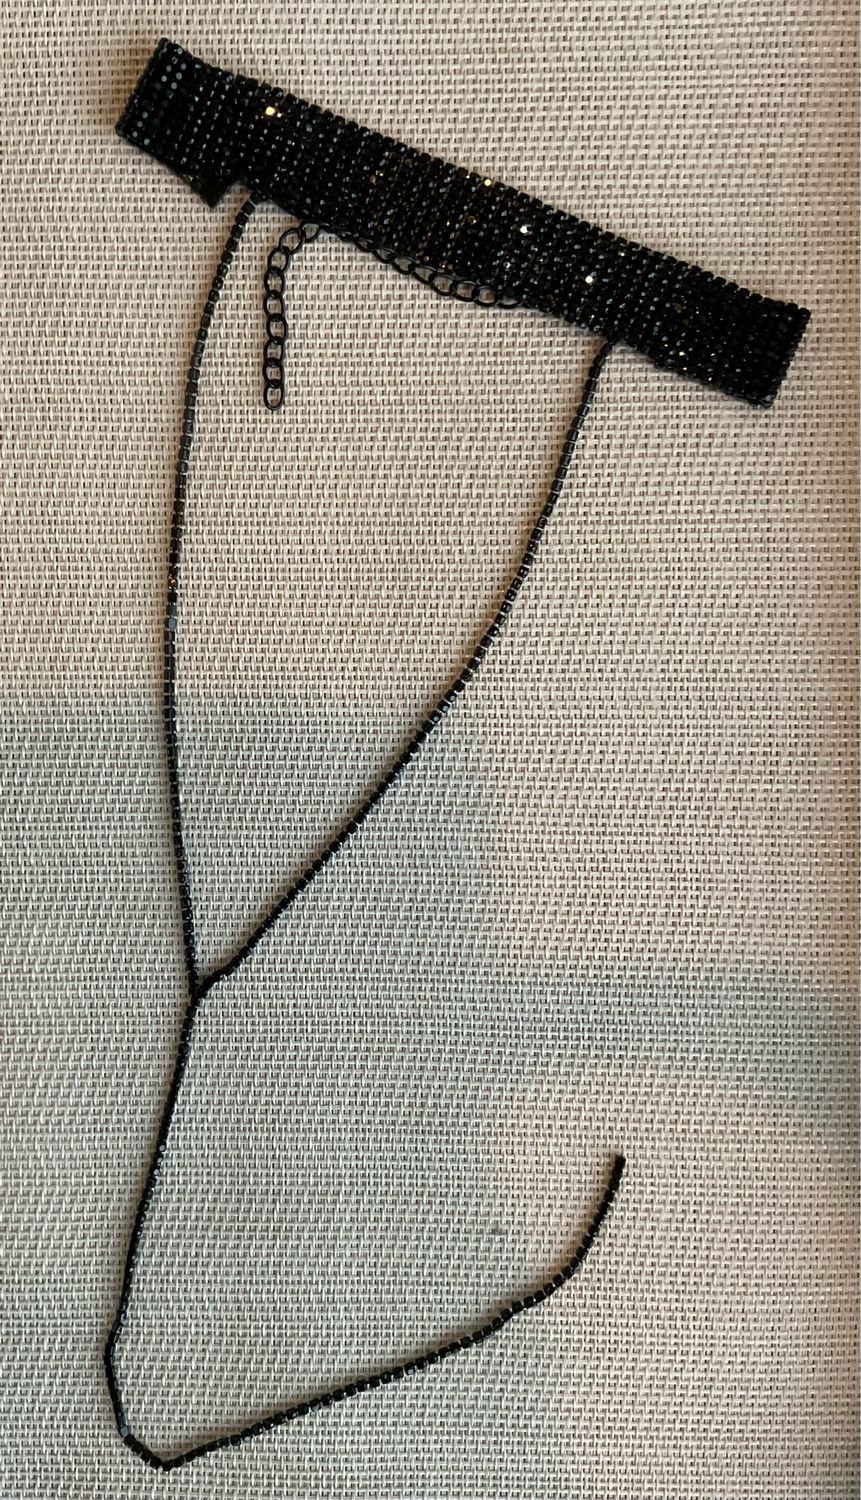 Black Rhinestone Necklace